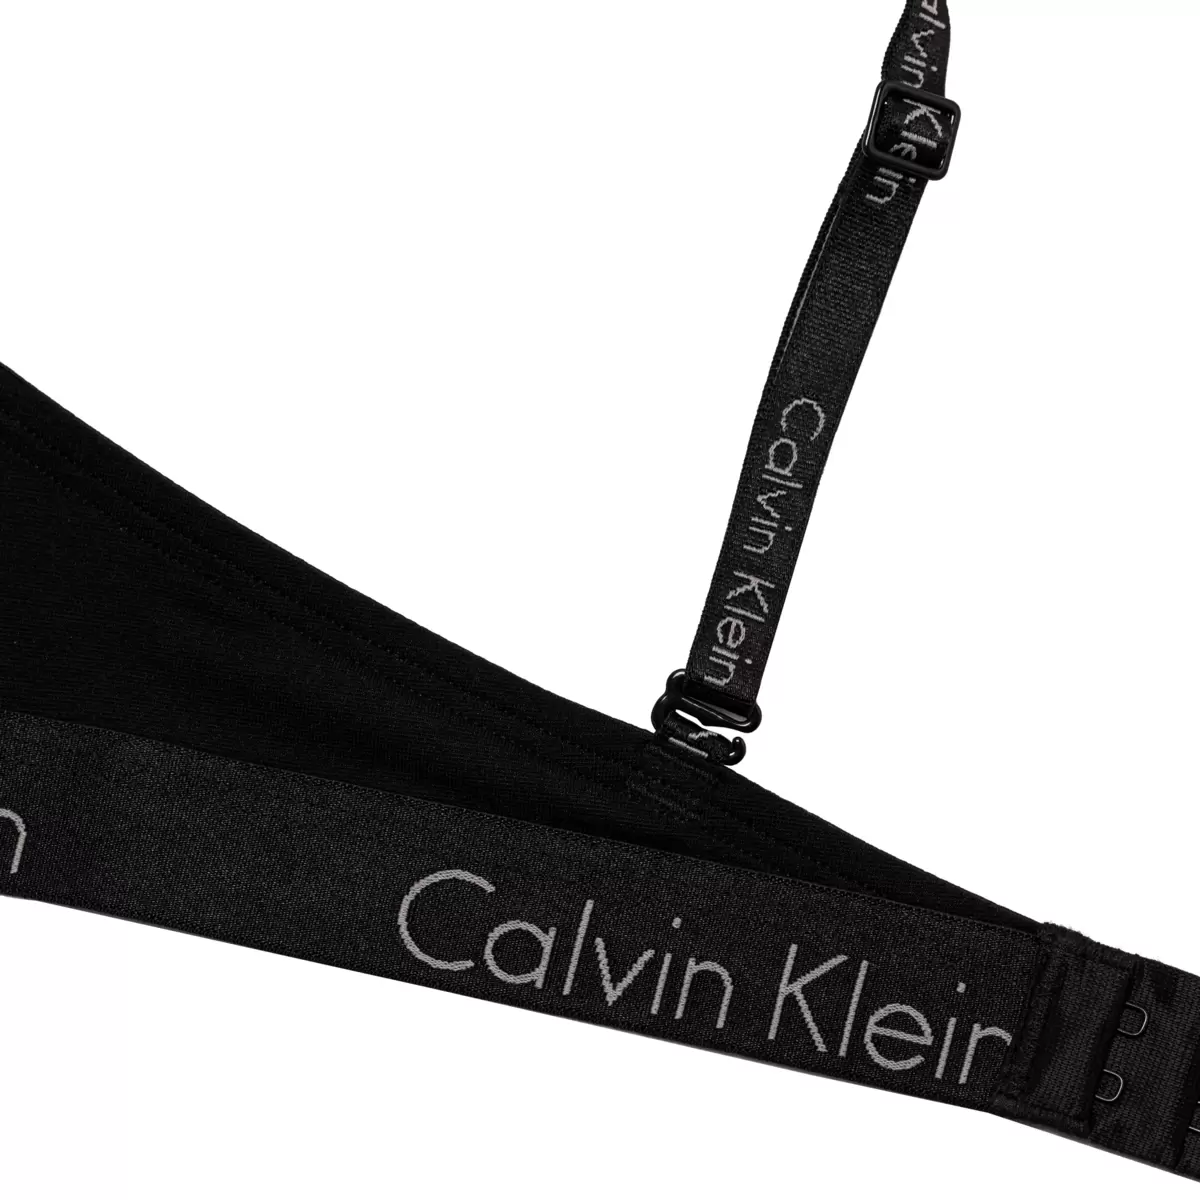 Calvin Klein 女舒適軟鋼圈內衣2入組 黑色 & 裸色 32B